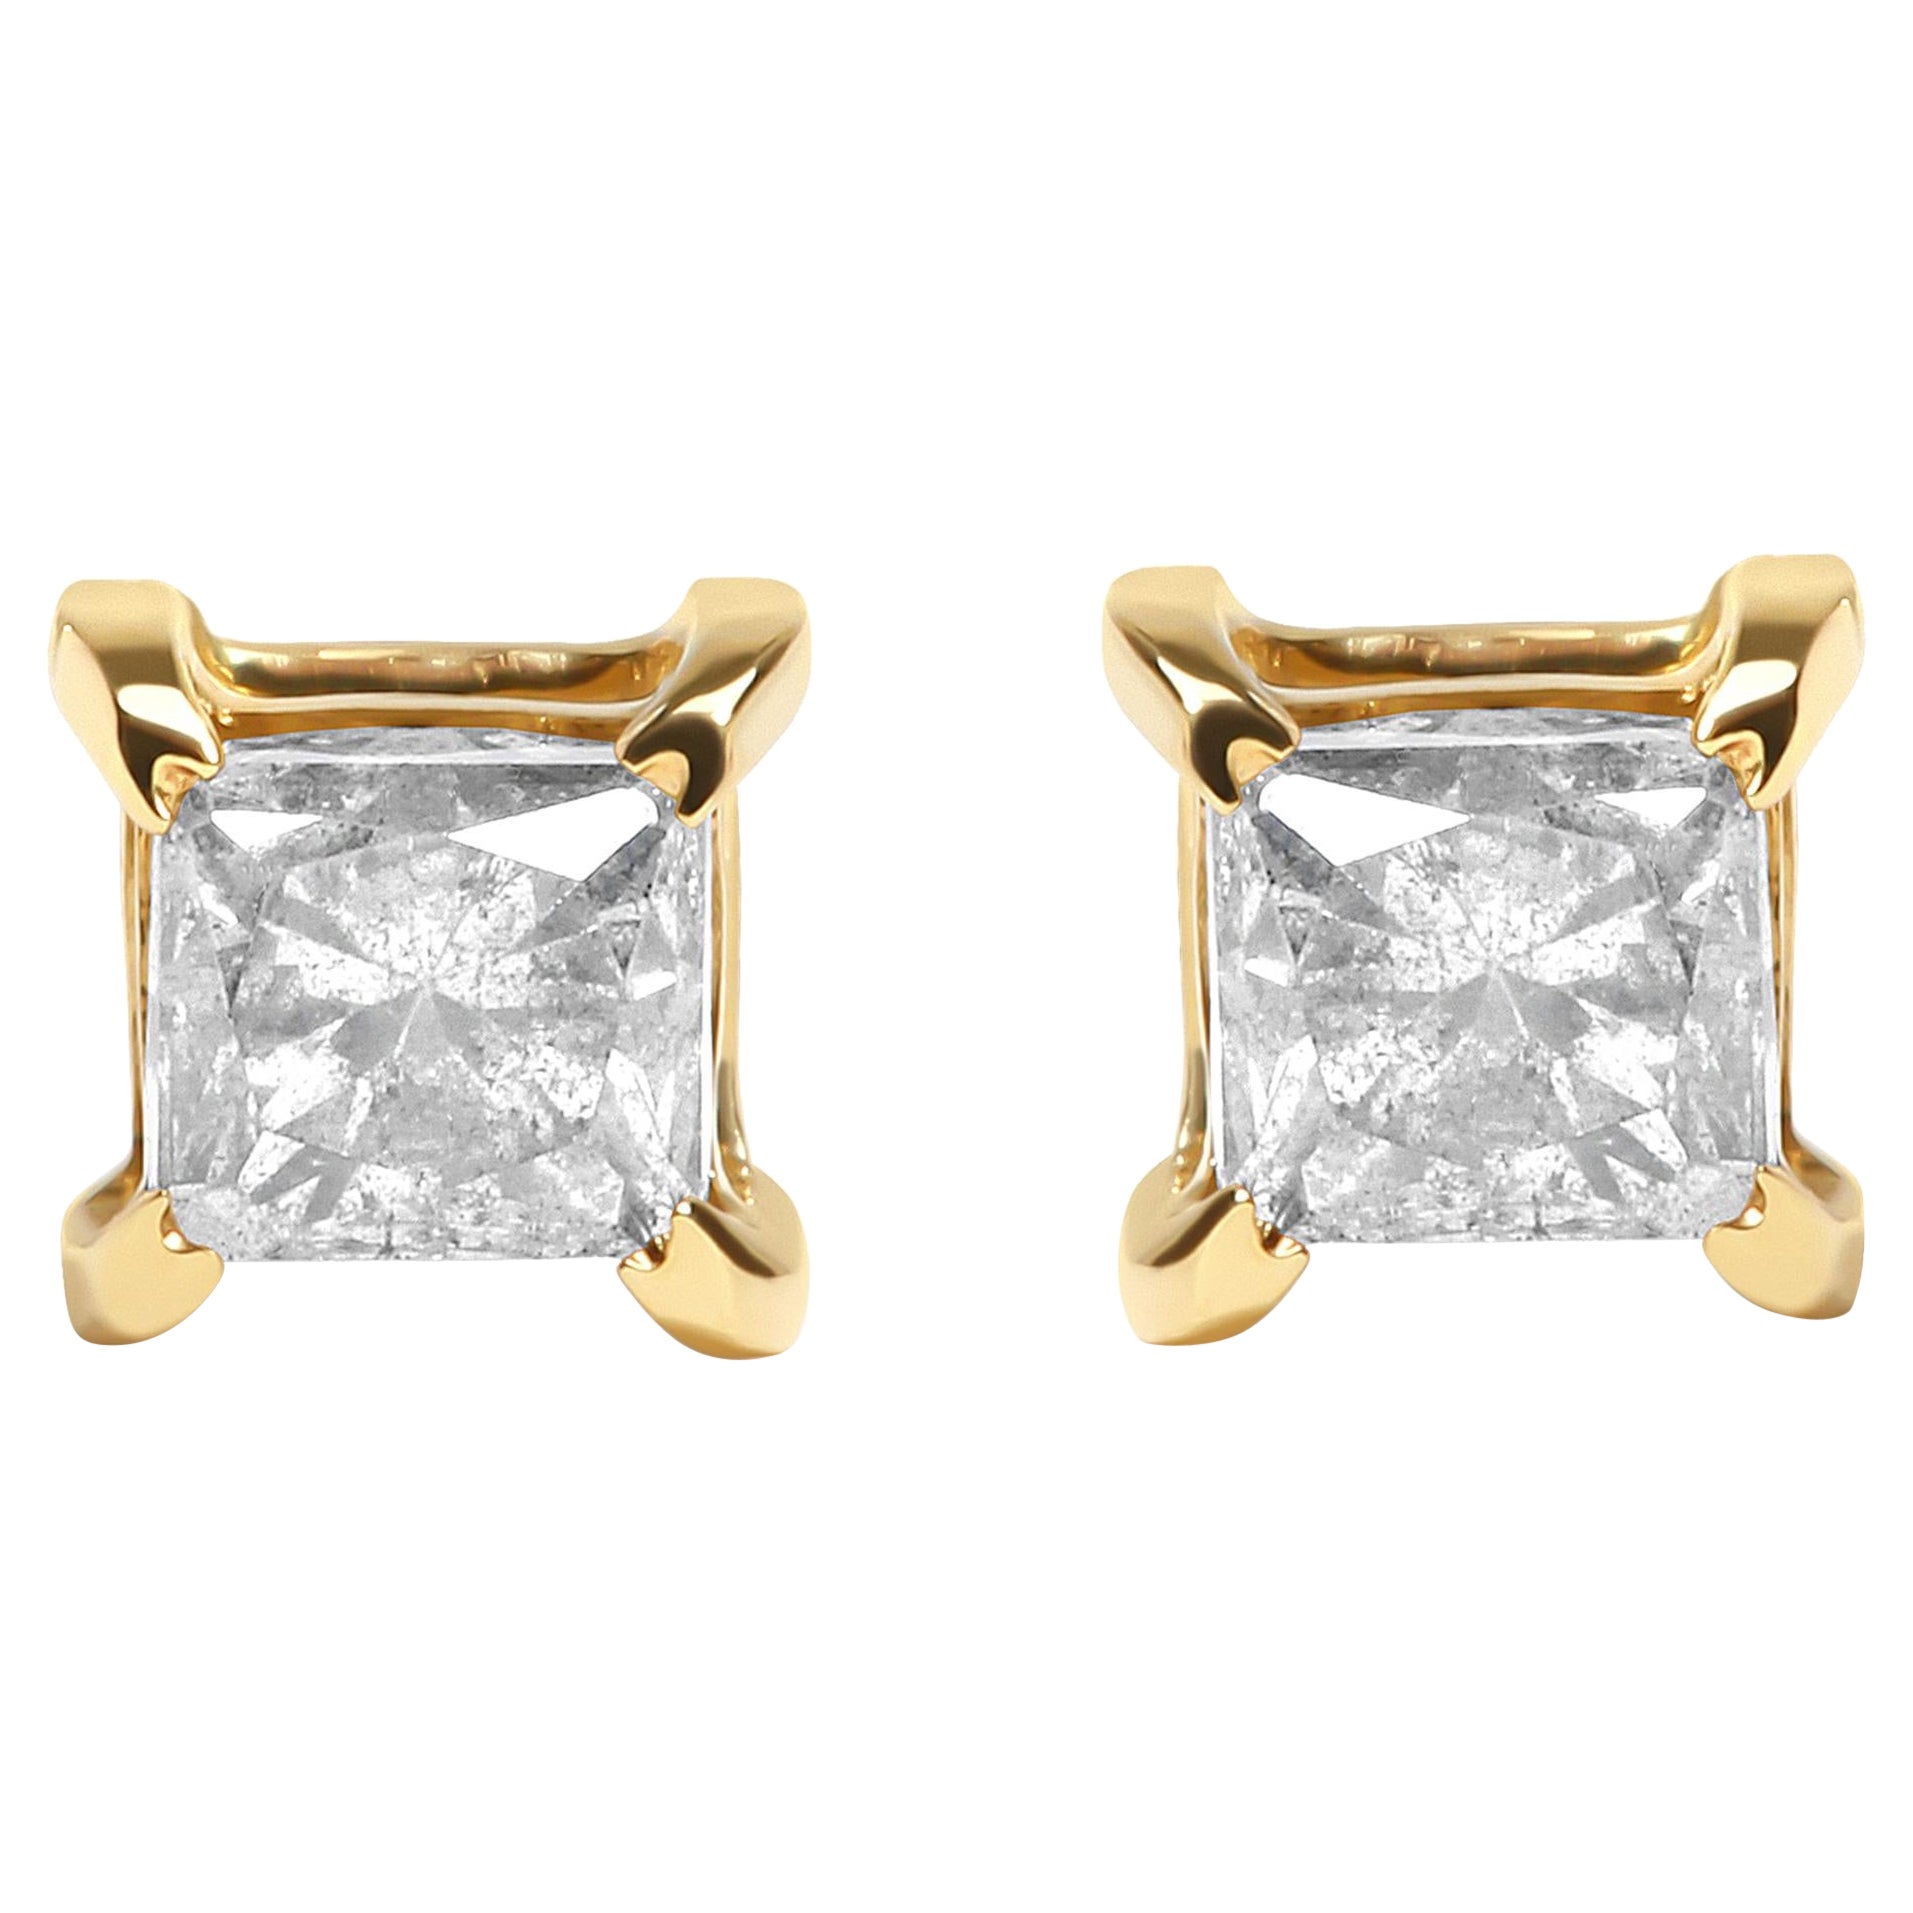 10K Yellow Gold 5/8 Carat Princess Cut Diamond 4-Prong Solitaire Stud Earrings